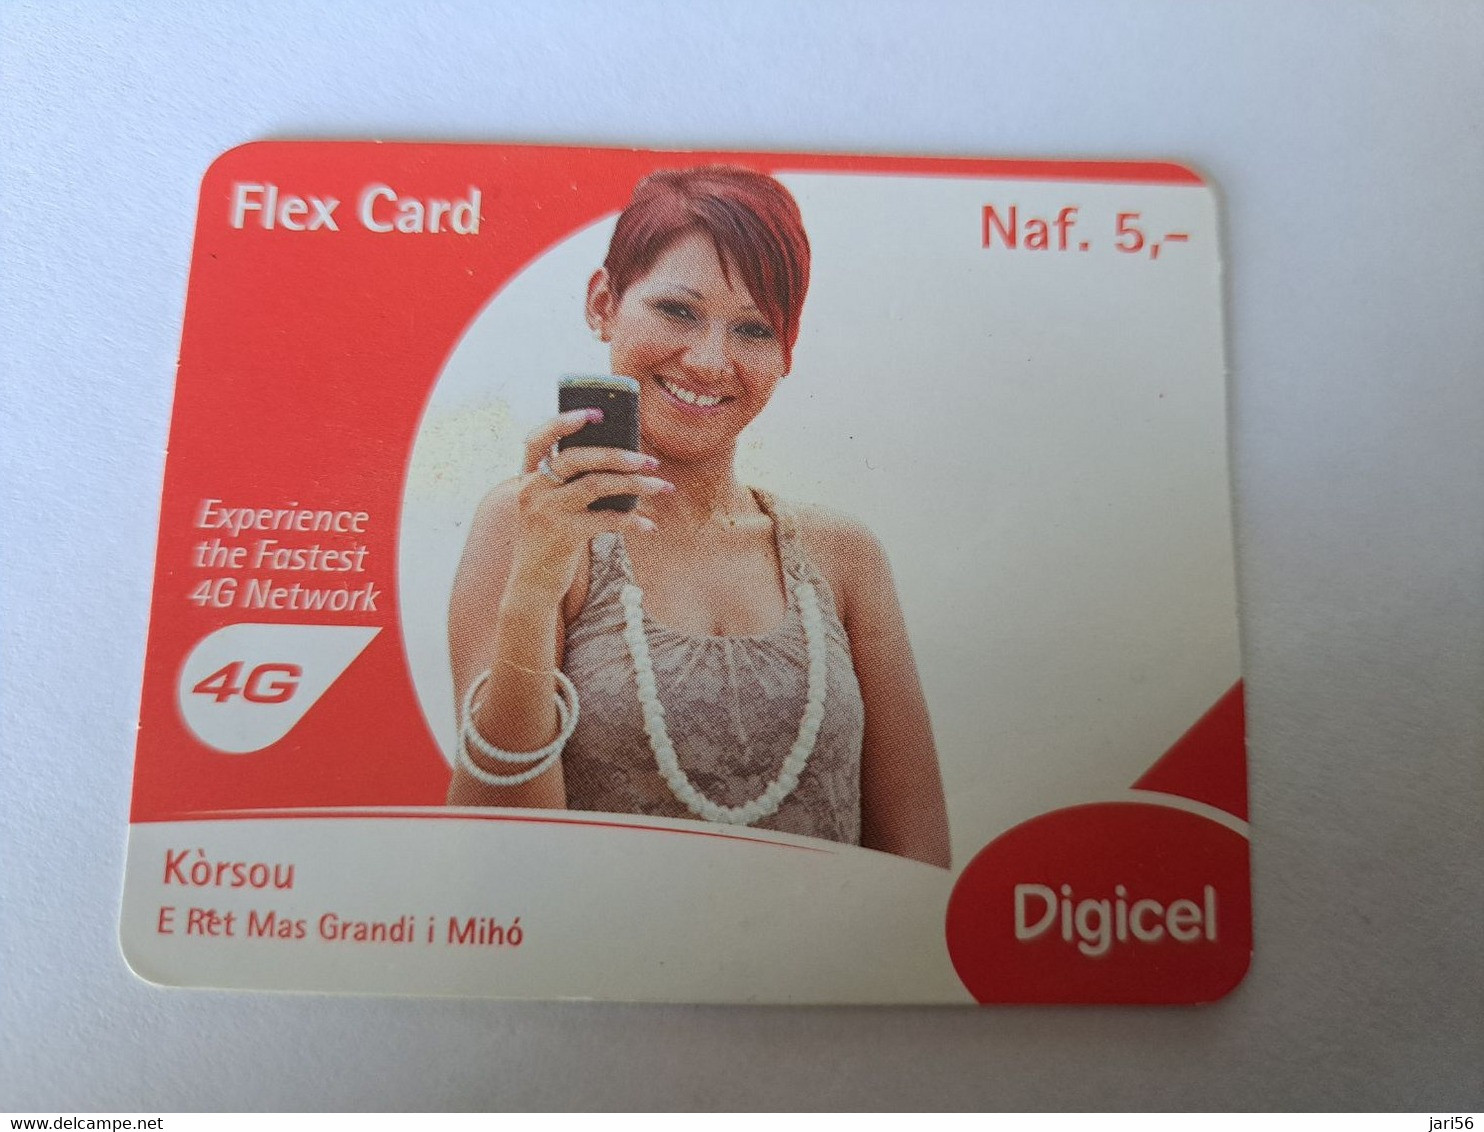 CURACAO  DIGICEL FLEX CARD  NAF 5,-  LADY ON PHONE    DATE 30/06/2013   VERY FINE USED CARD        ** 12087** - Antillas (Nerlandesas)